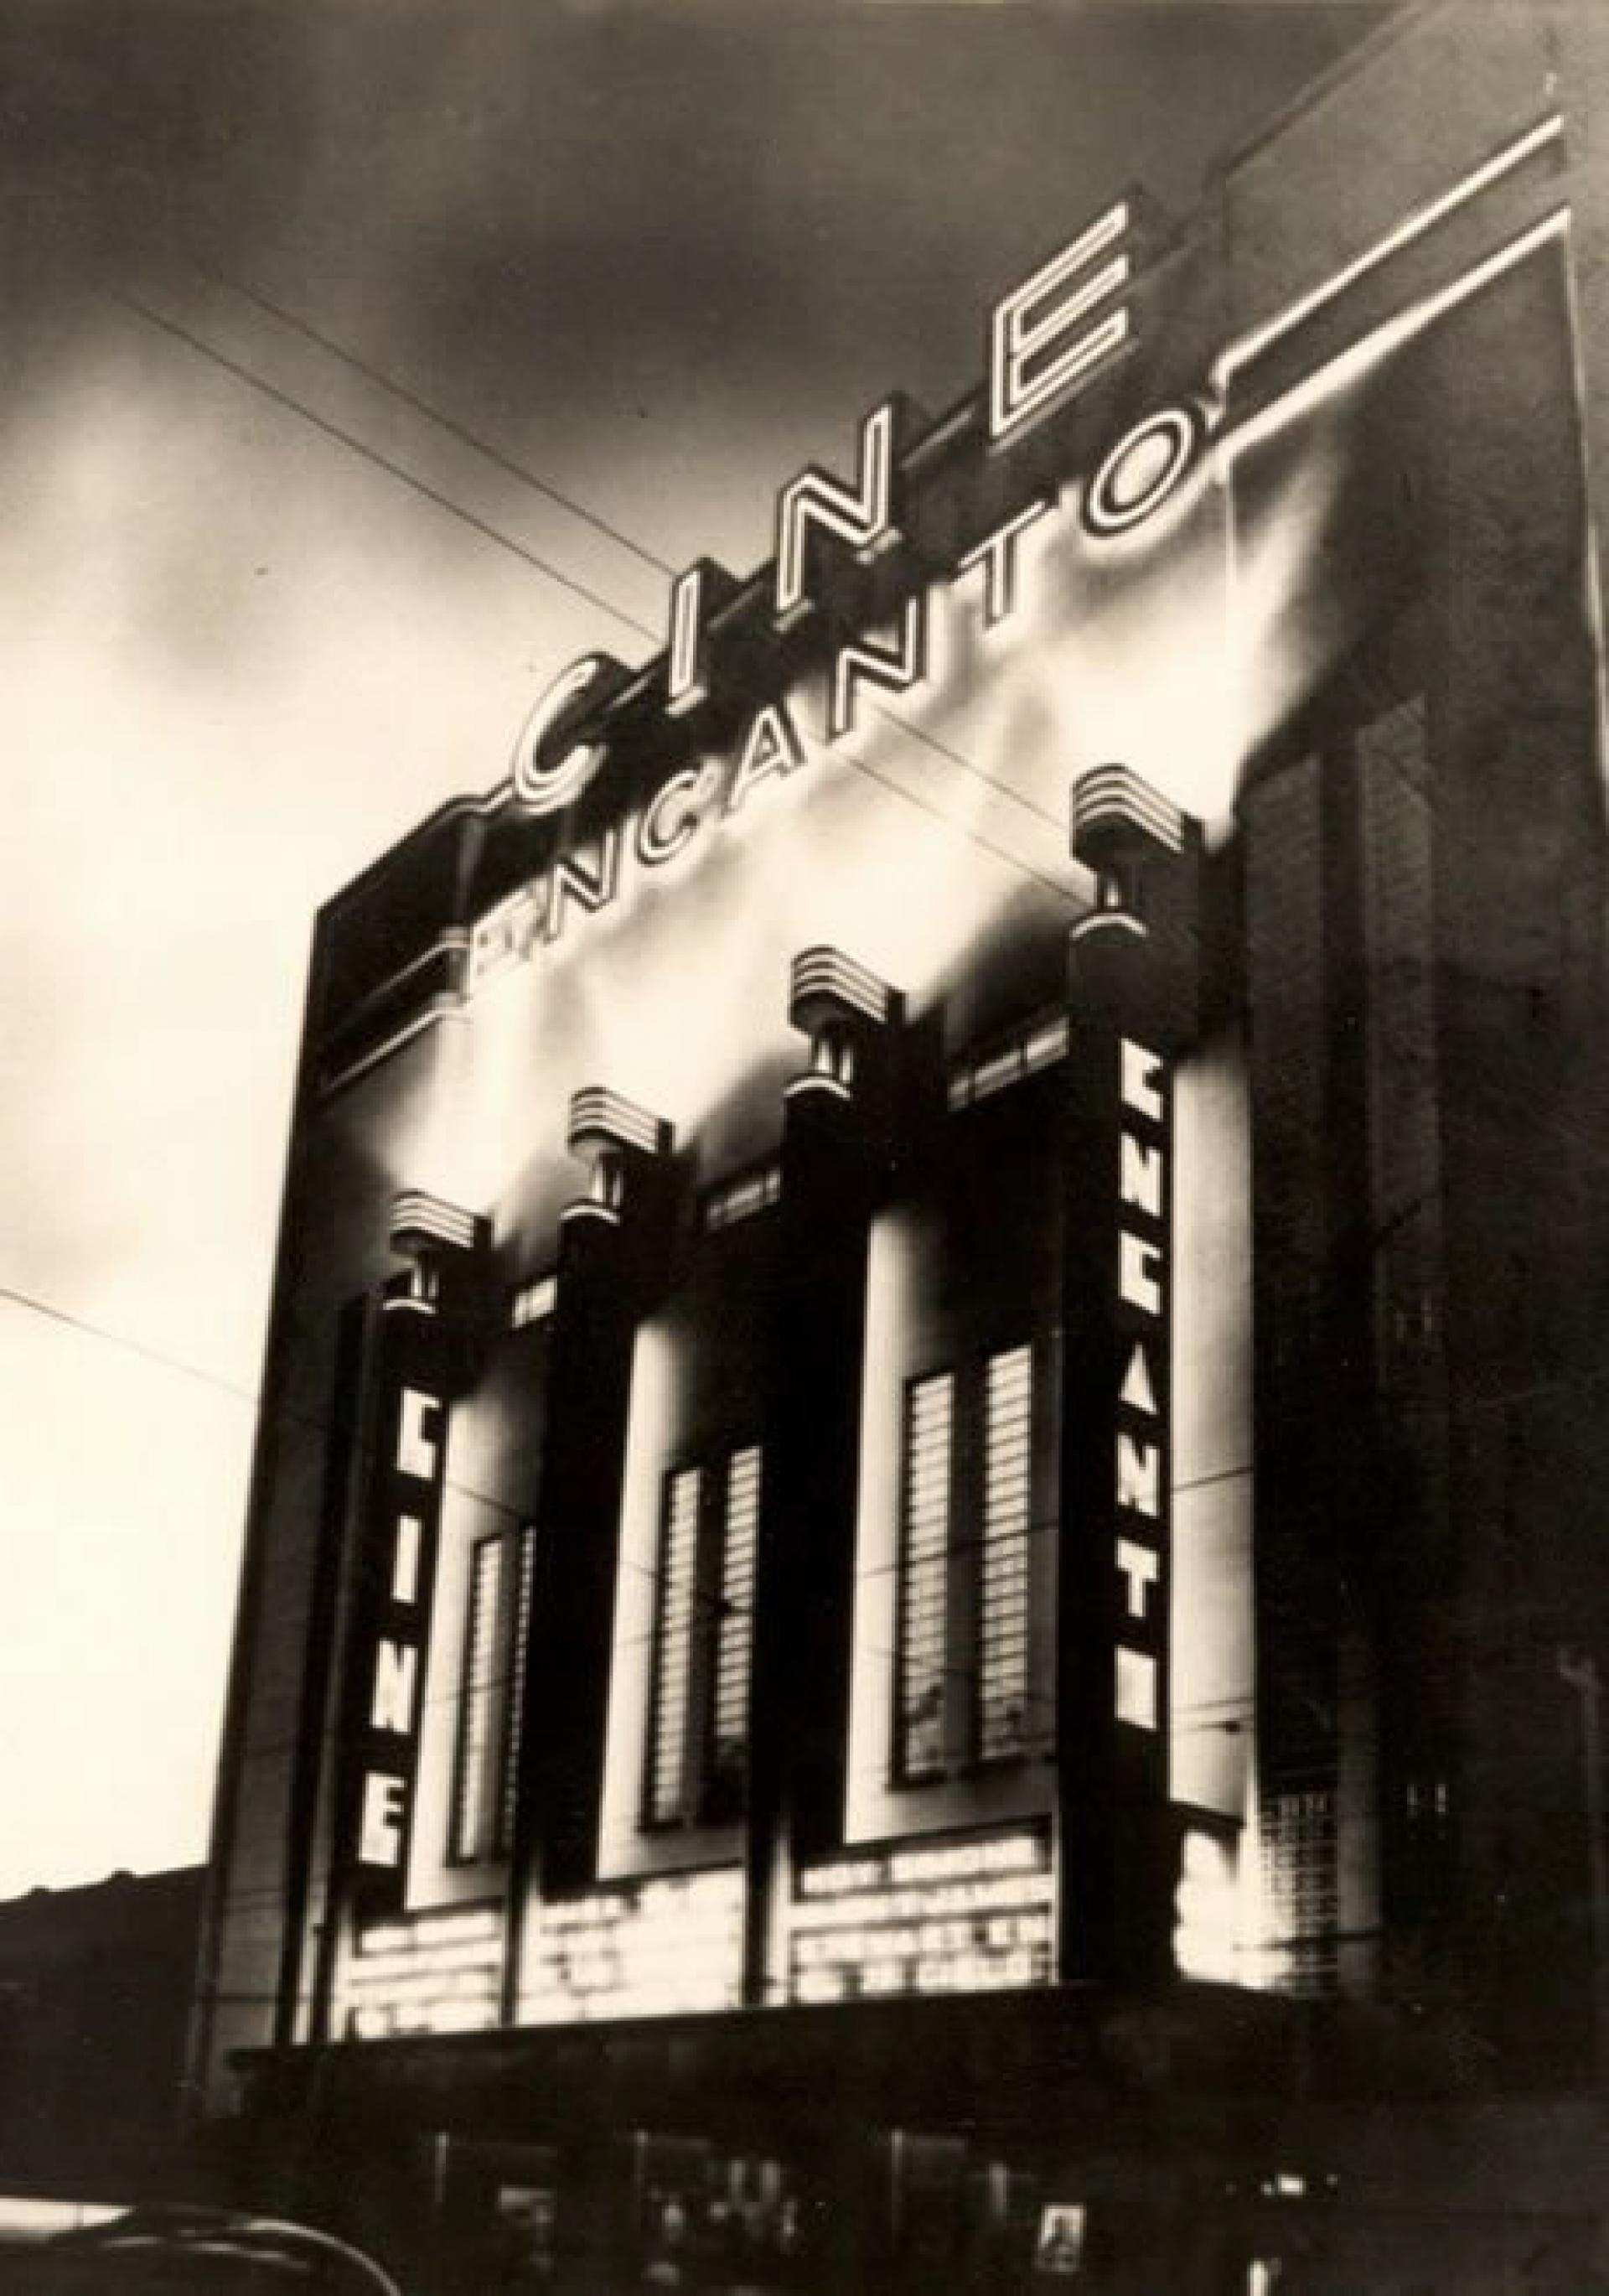 Cine Encanto (1937) by Francisco Serrano was lost in the earthquake of 1957. | Photo via Archivo Francisco Serrano